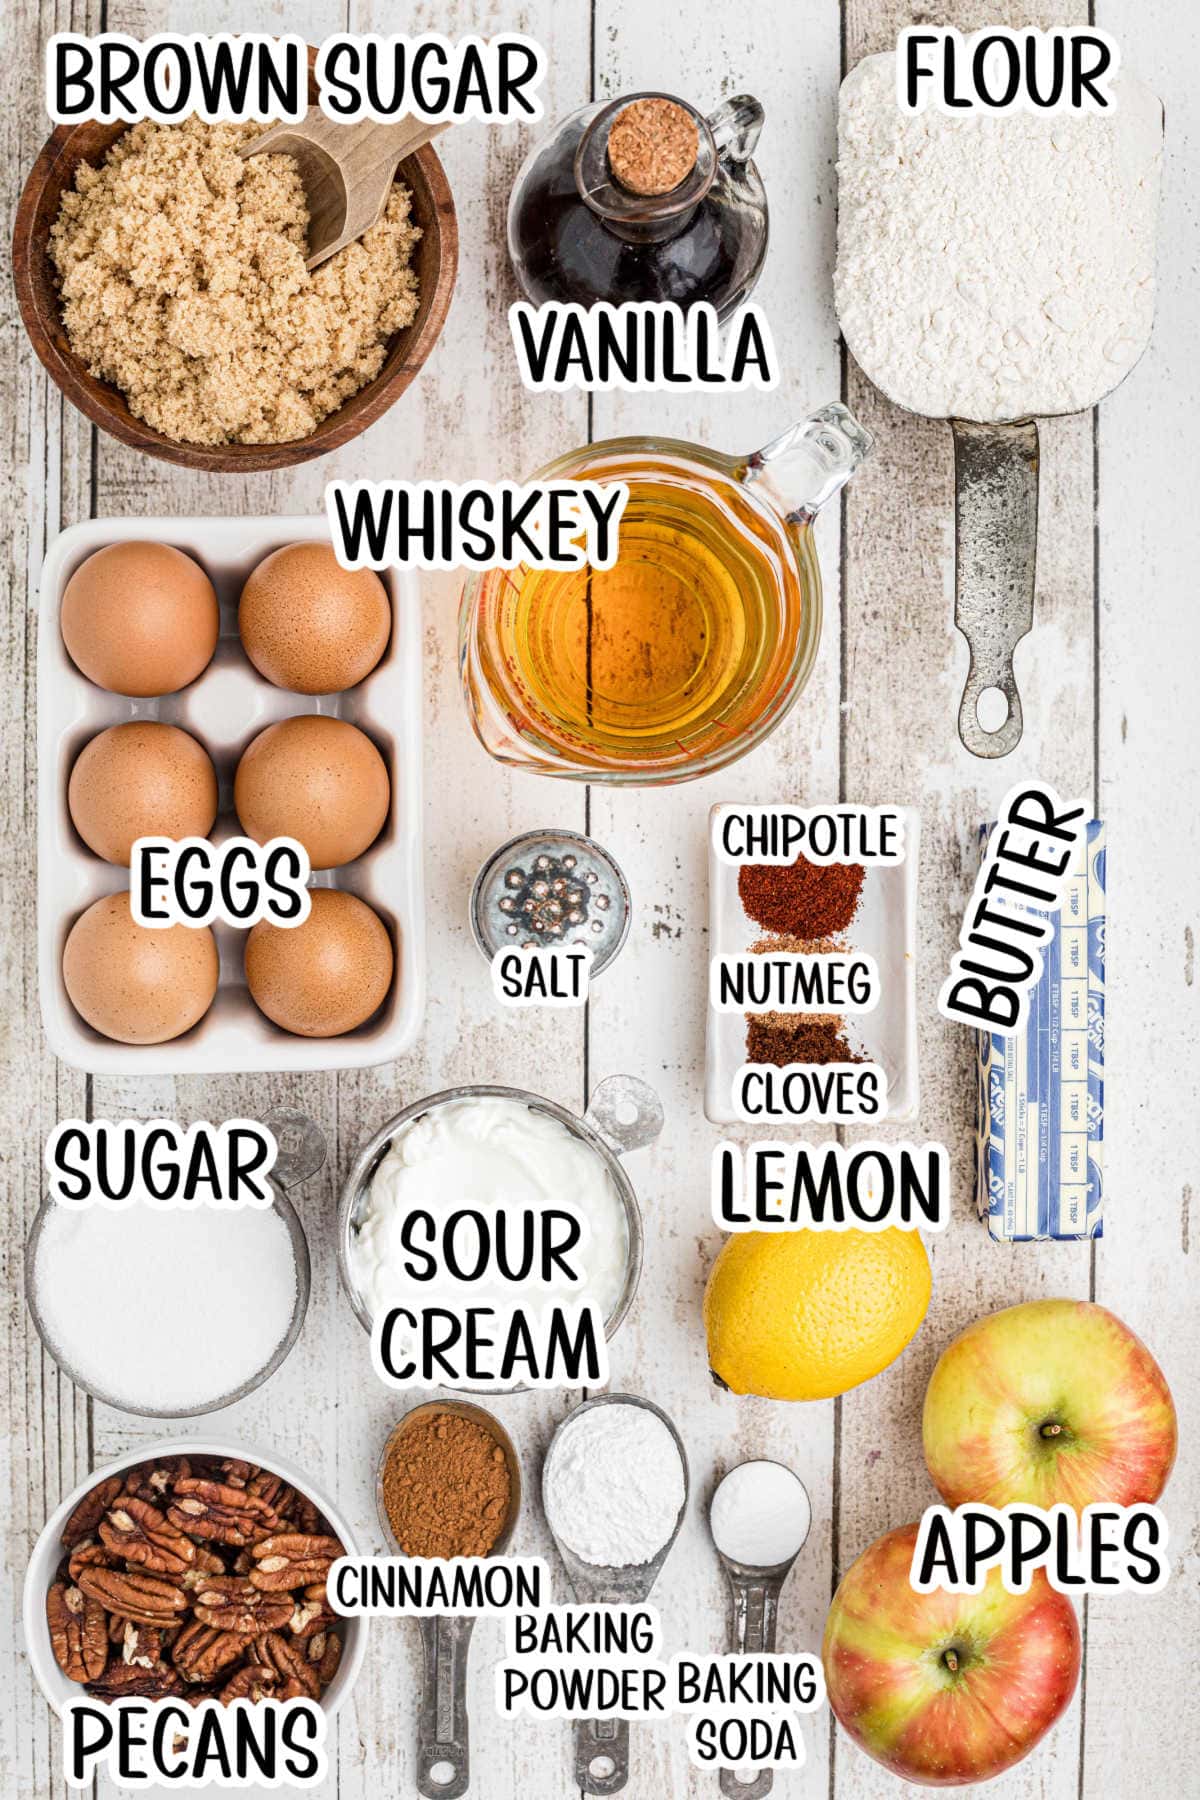 Ingredients for apple bundt cake recipe.